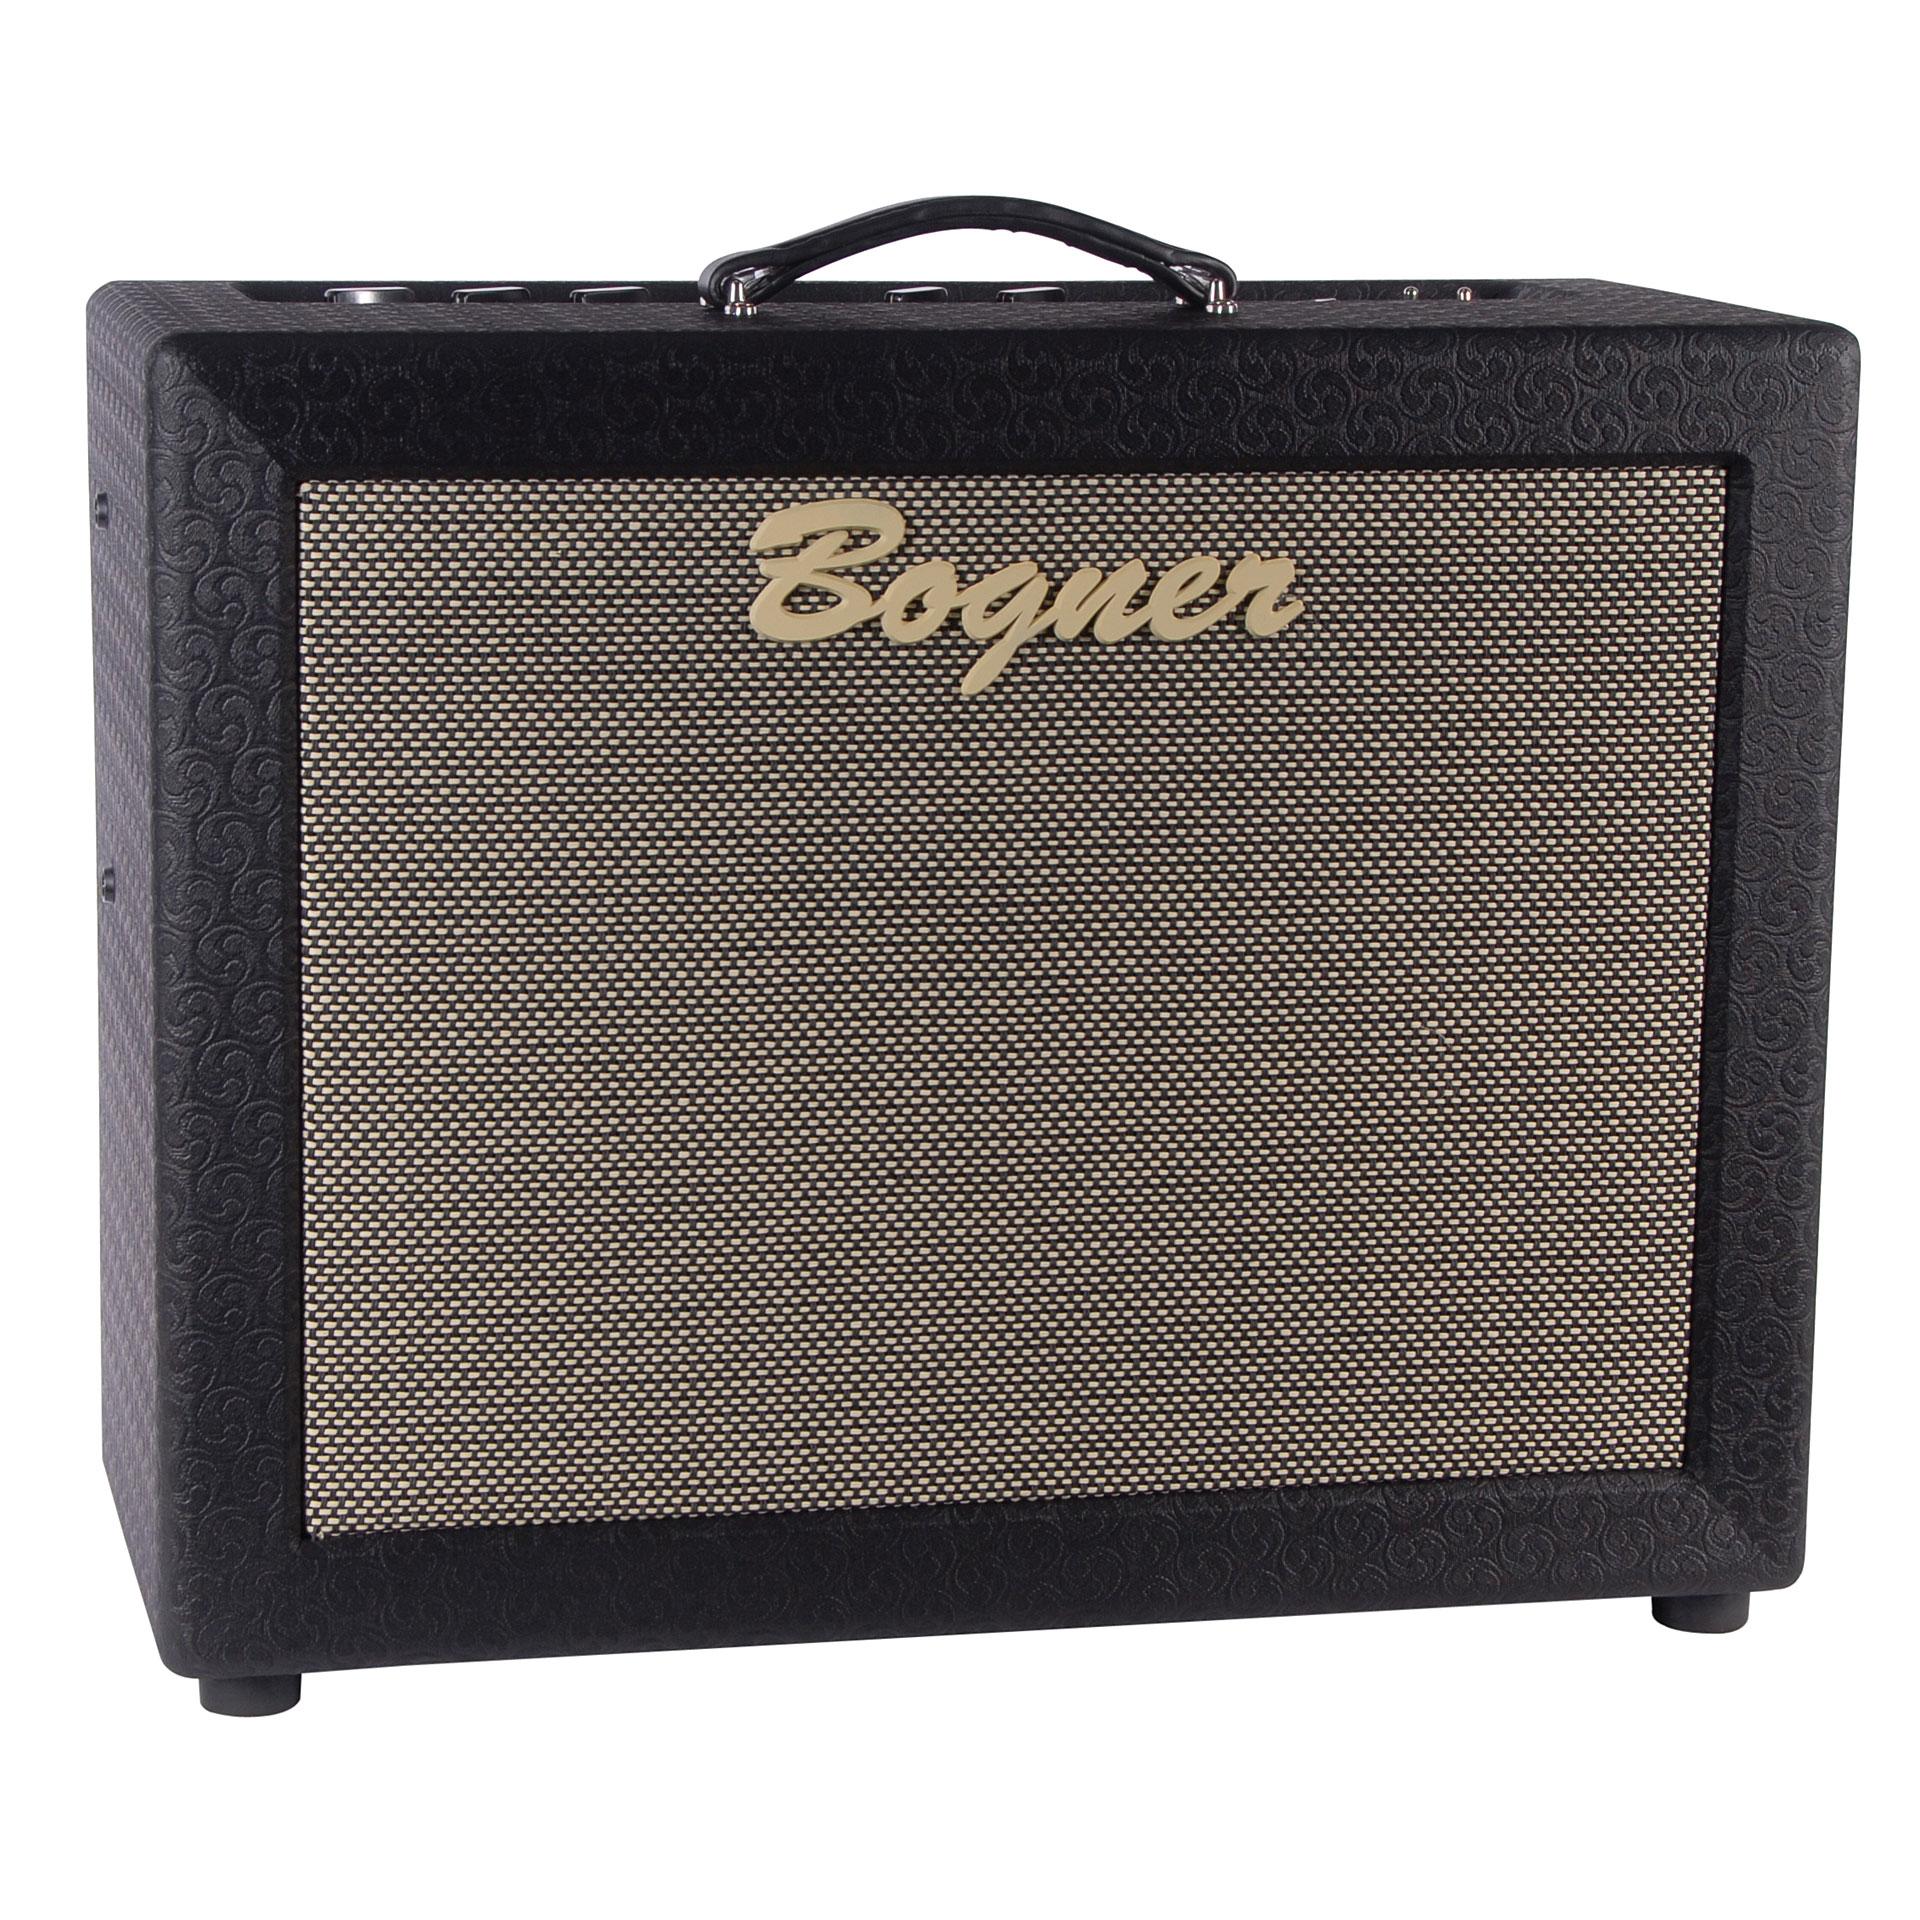 Foto Bogner Goldfinger 45, Amplificador guitarra eléctrica foto 811844